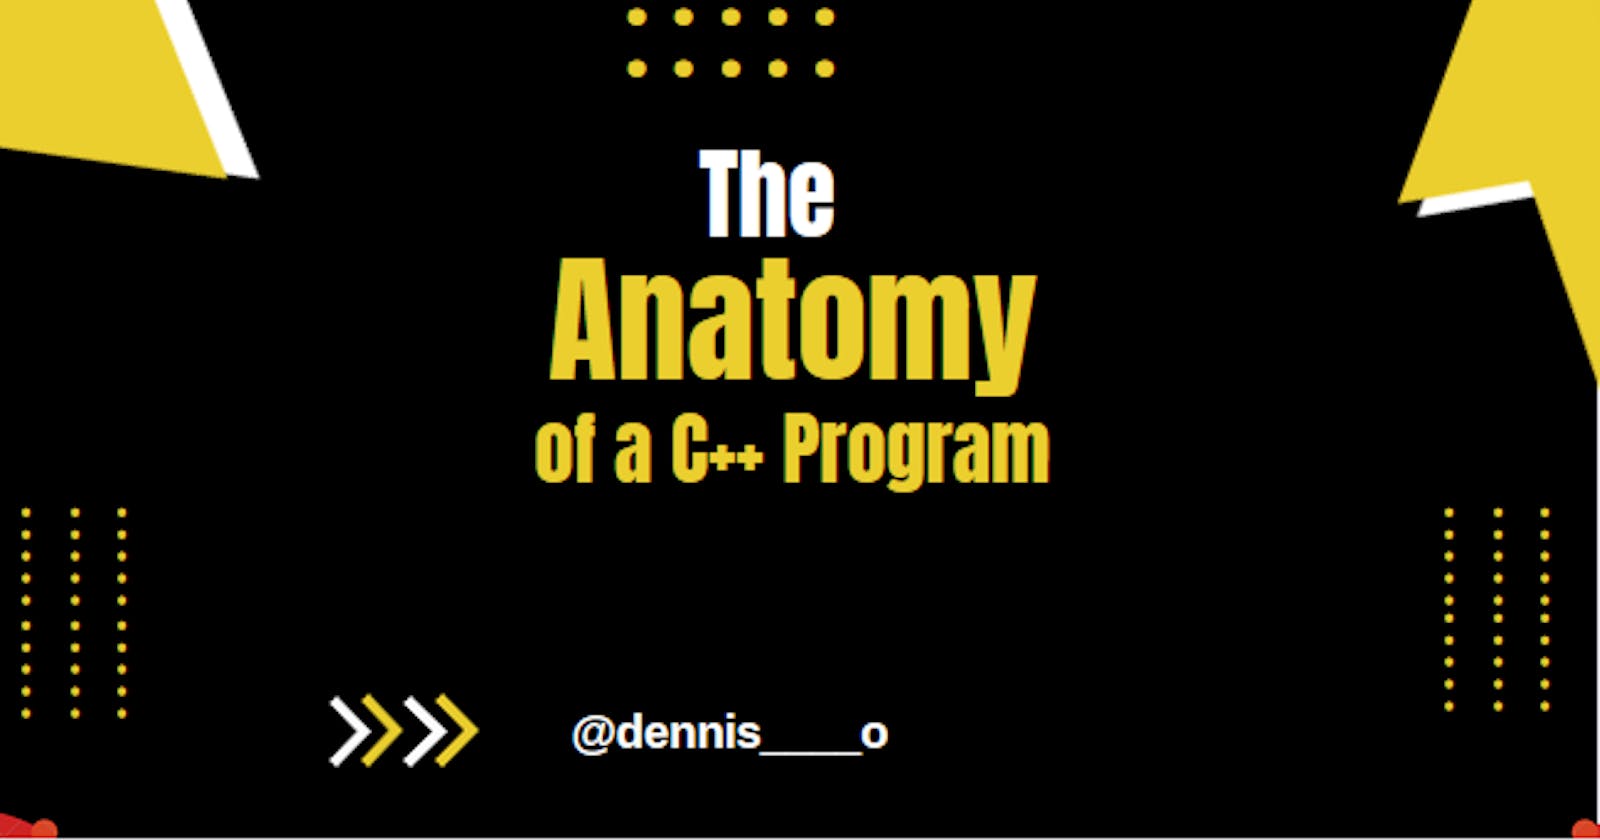 The Anatomy of a C++ Program